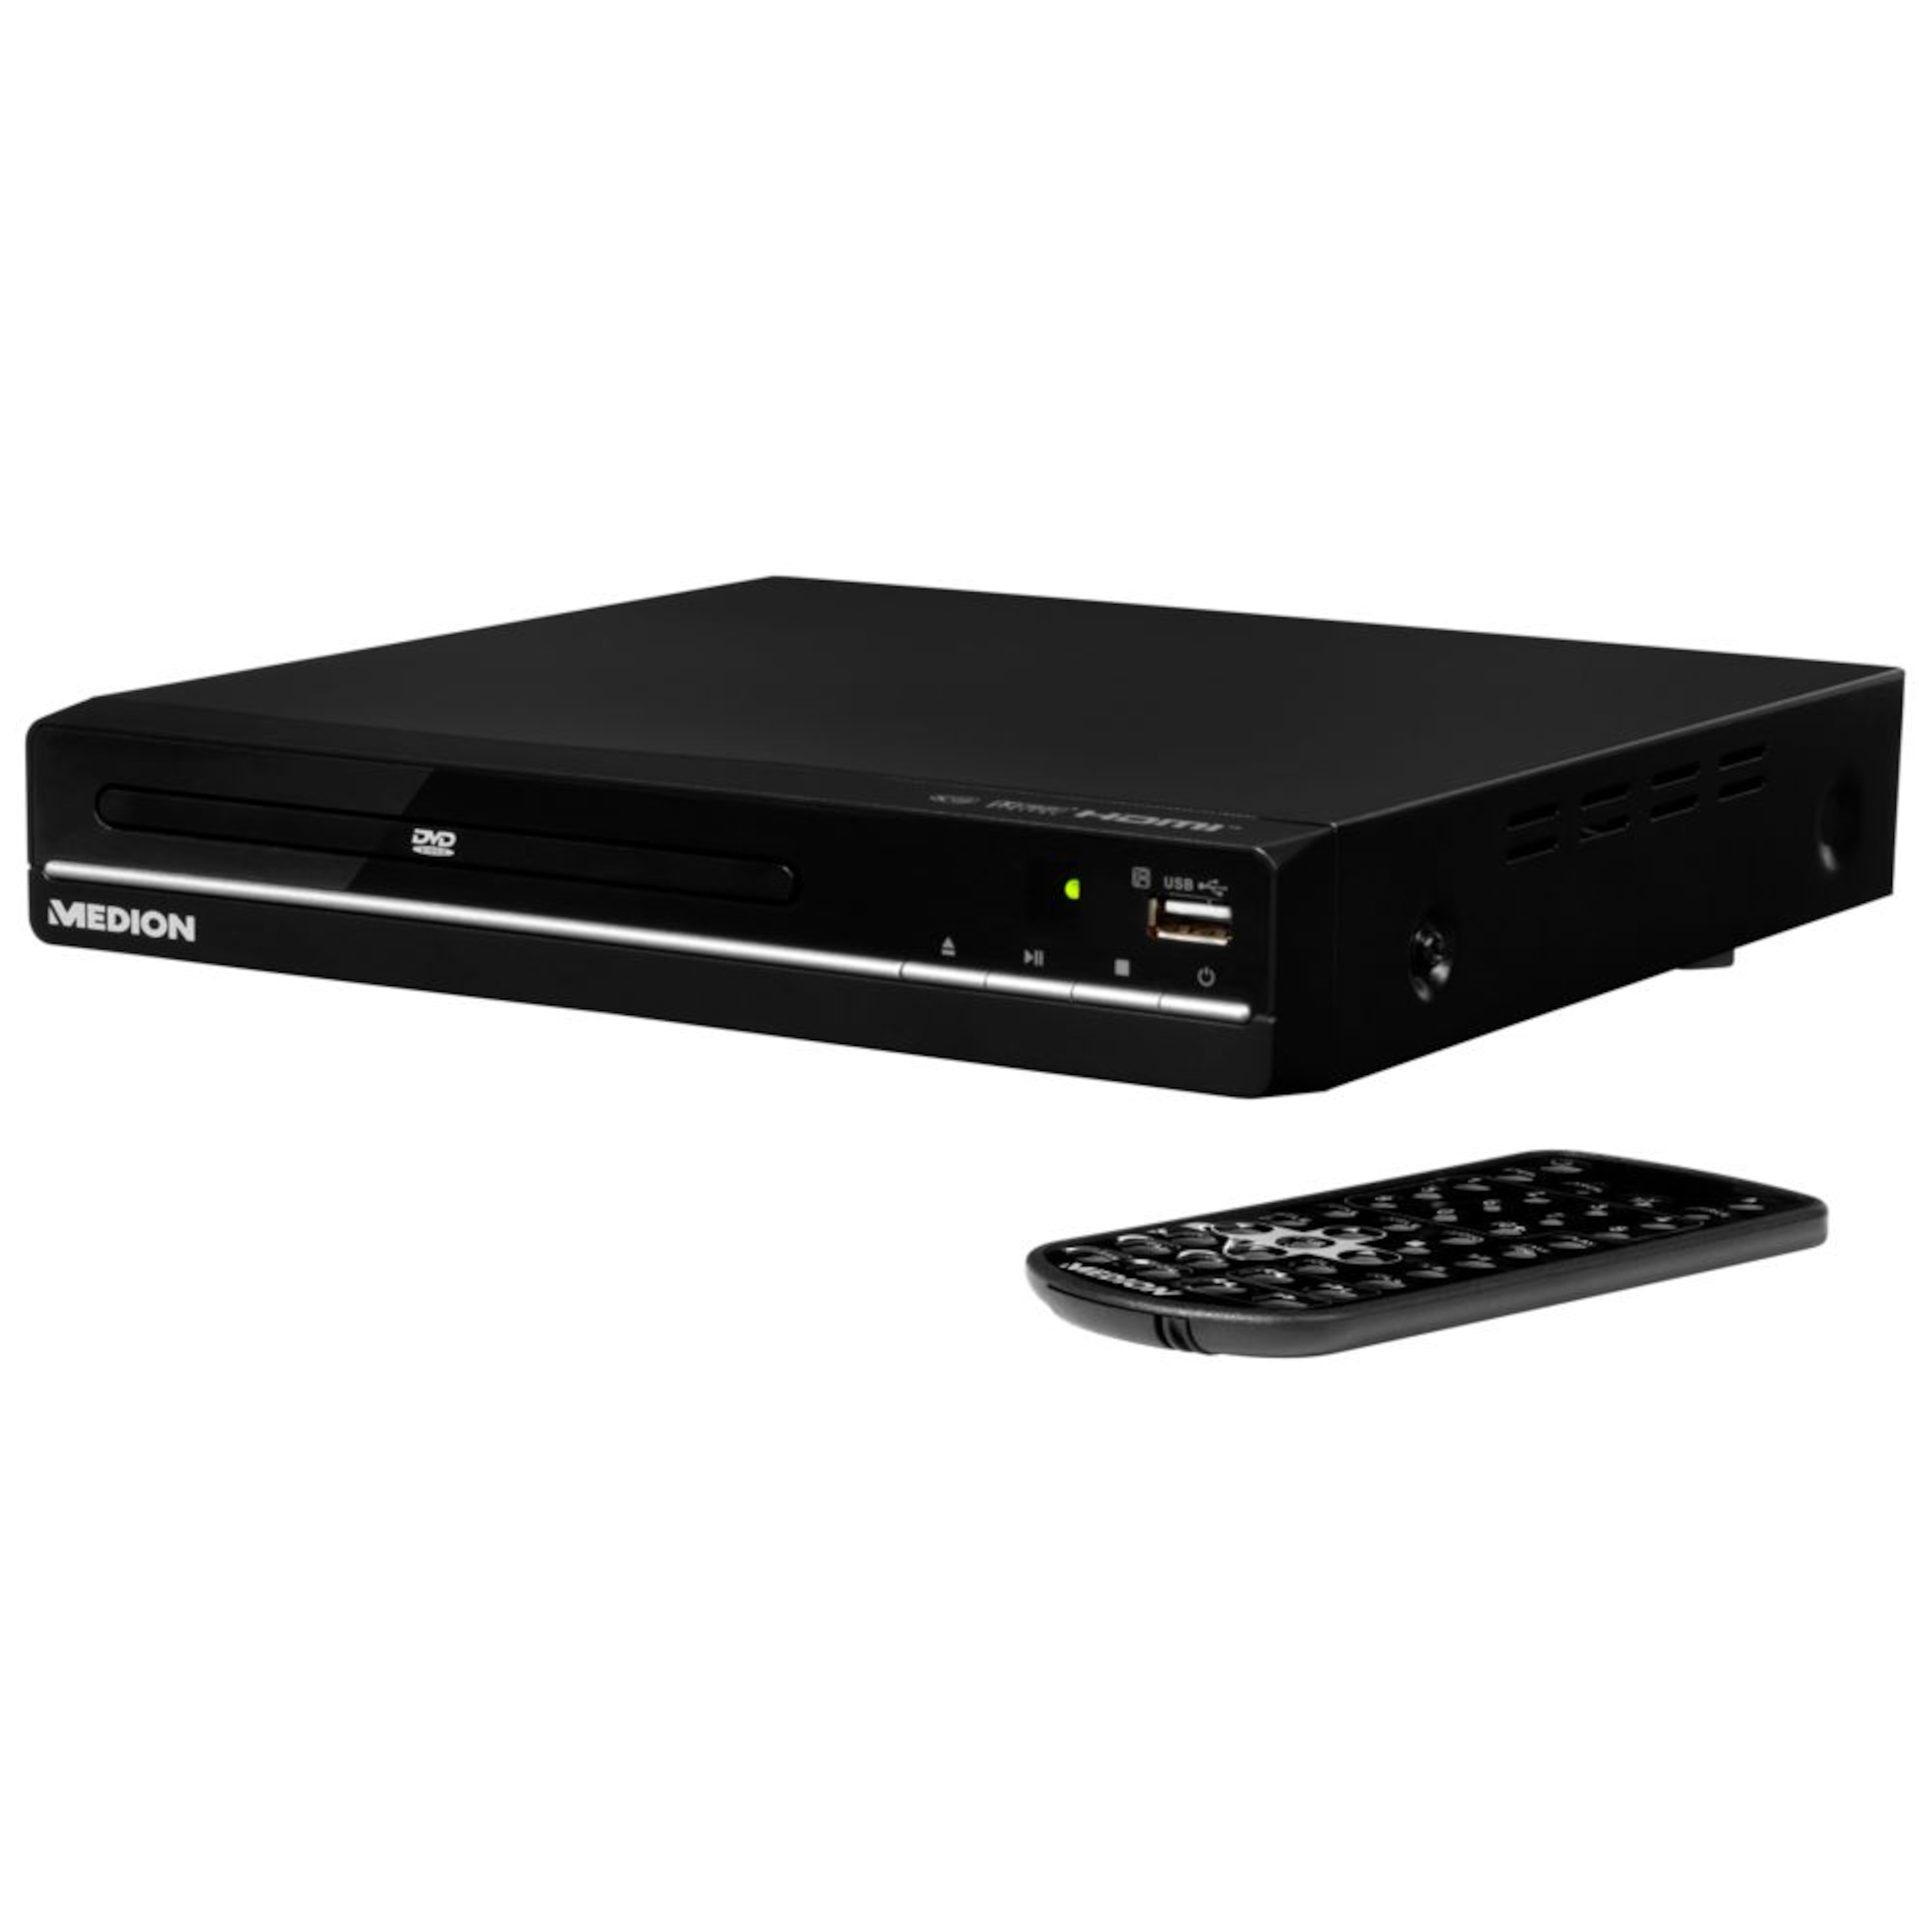 MEDION® LIFE® E71021 DVD-Player, HDMI, USB, Xvid und MPEG4 kompatibel, mehrsprachiges OSD (On Screen Display)  (B-Ware)